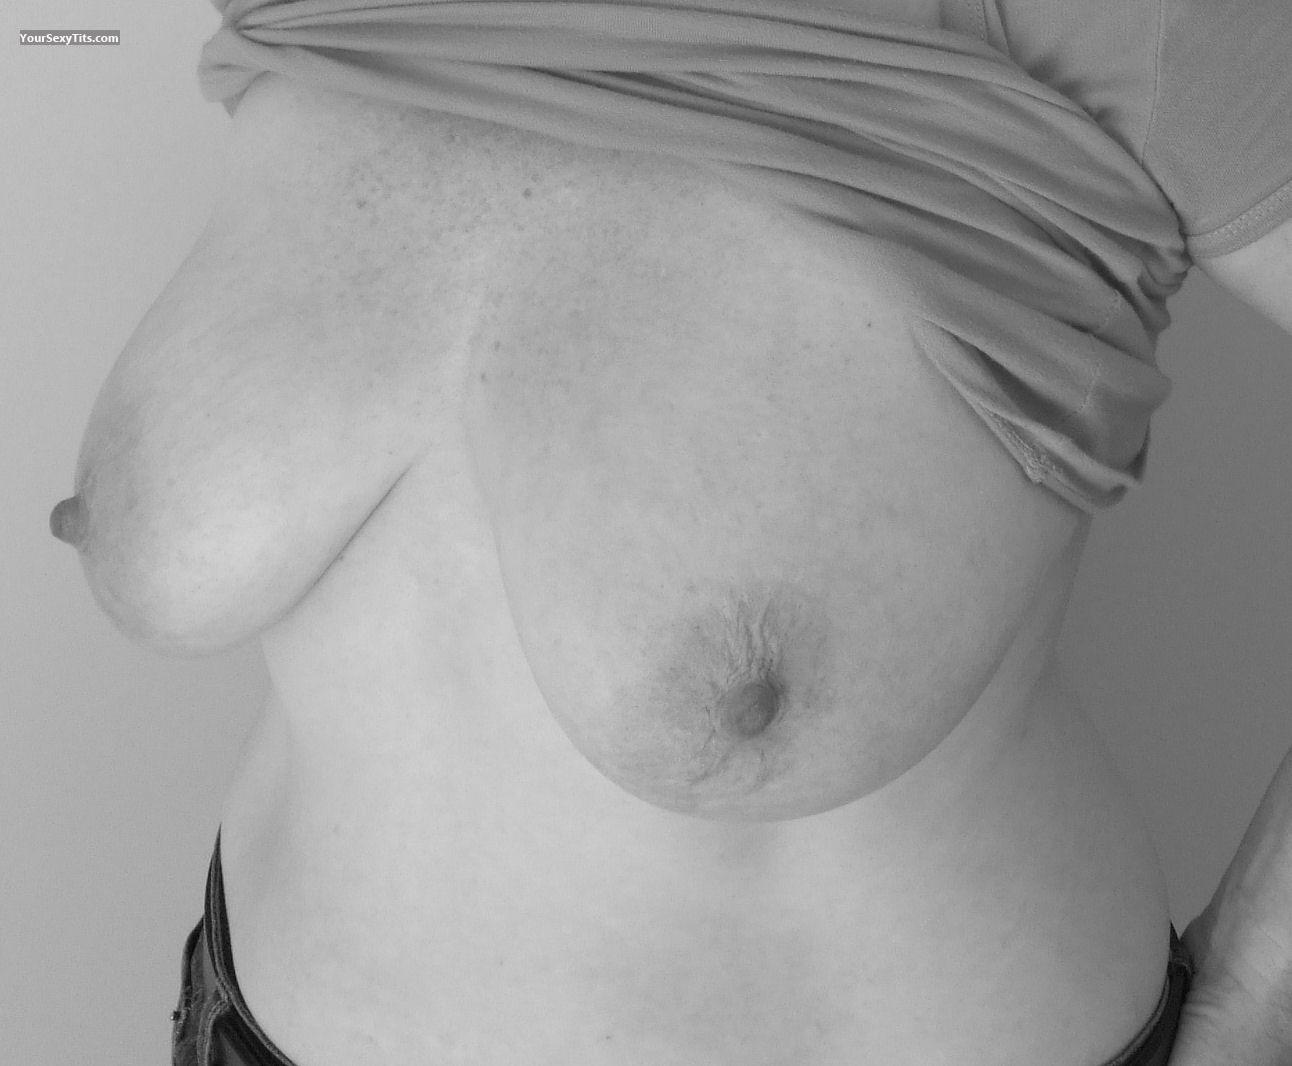 Tit Flash: Wife's Big Tits - SexyWifey from United Kingdom